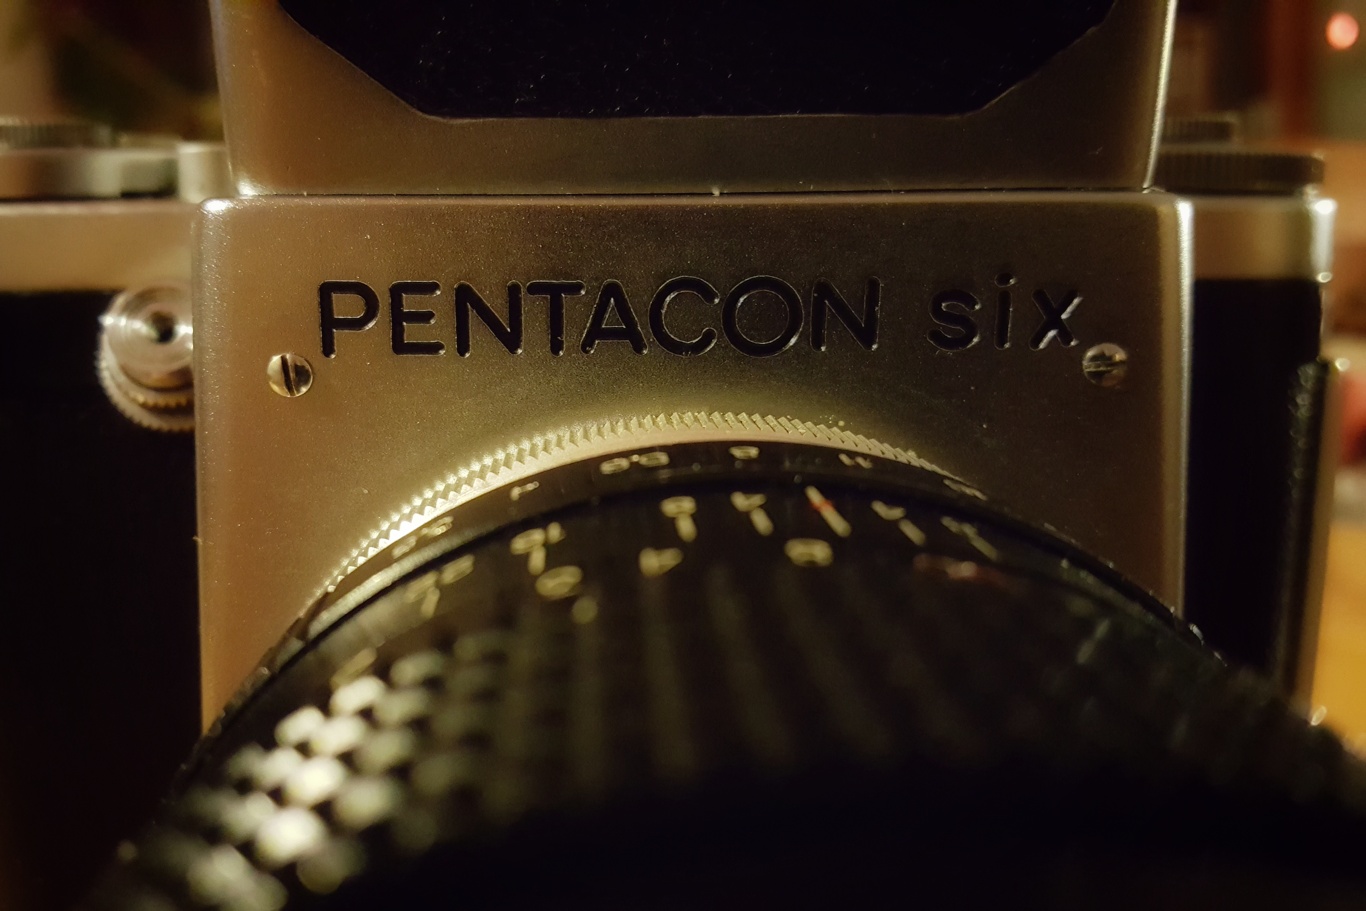 Pentacon six